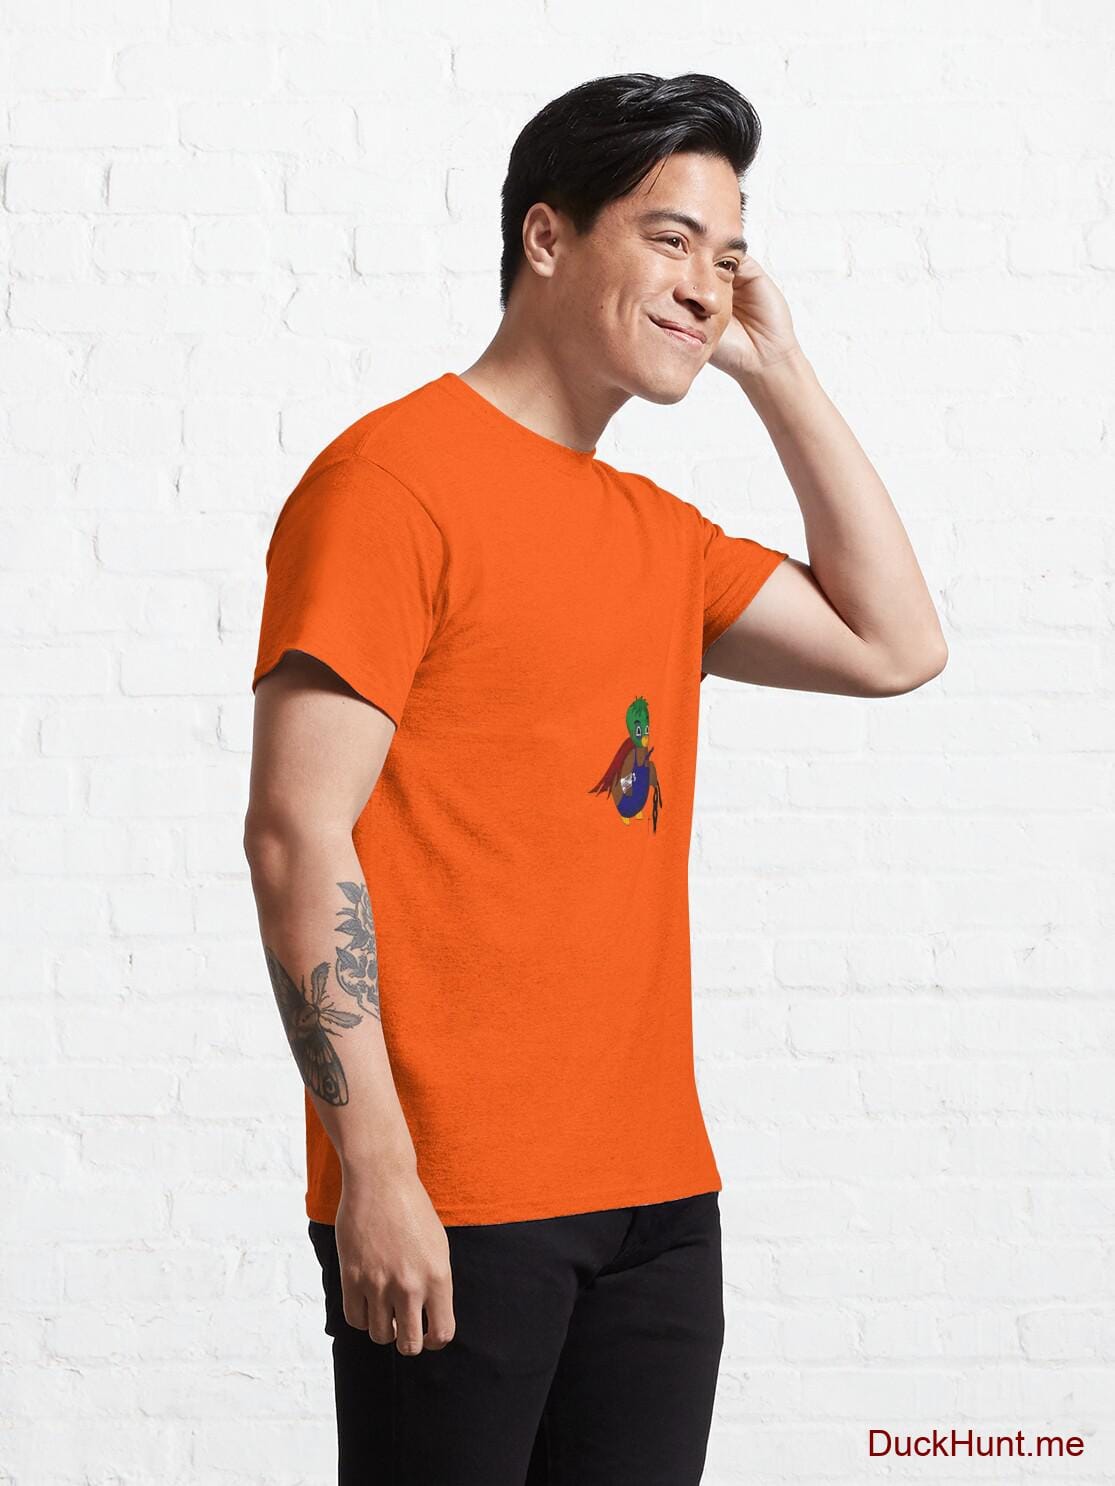 Dead DuckHunt Boss (smokeless) Orange Classic T-Shirt (Front printed) alternative image 4